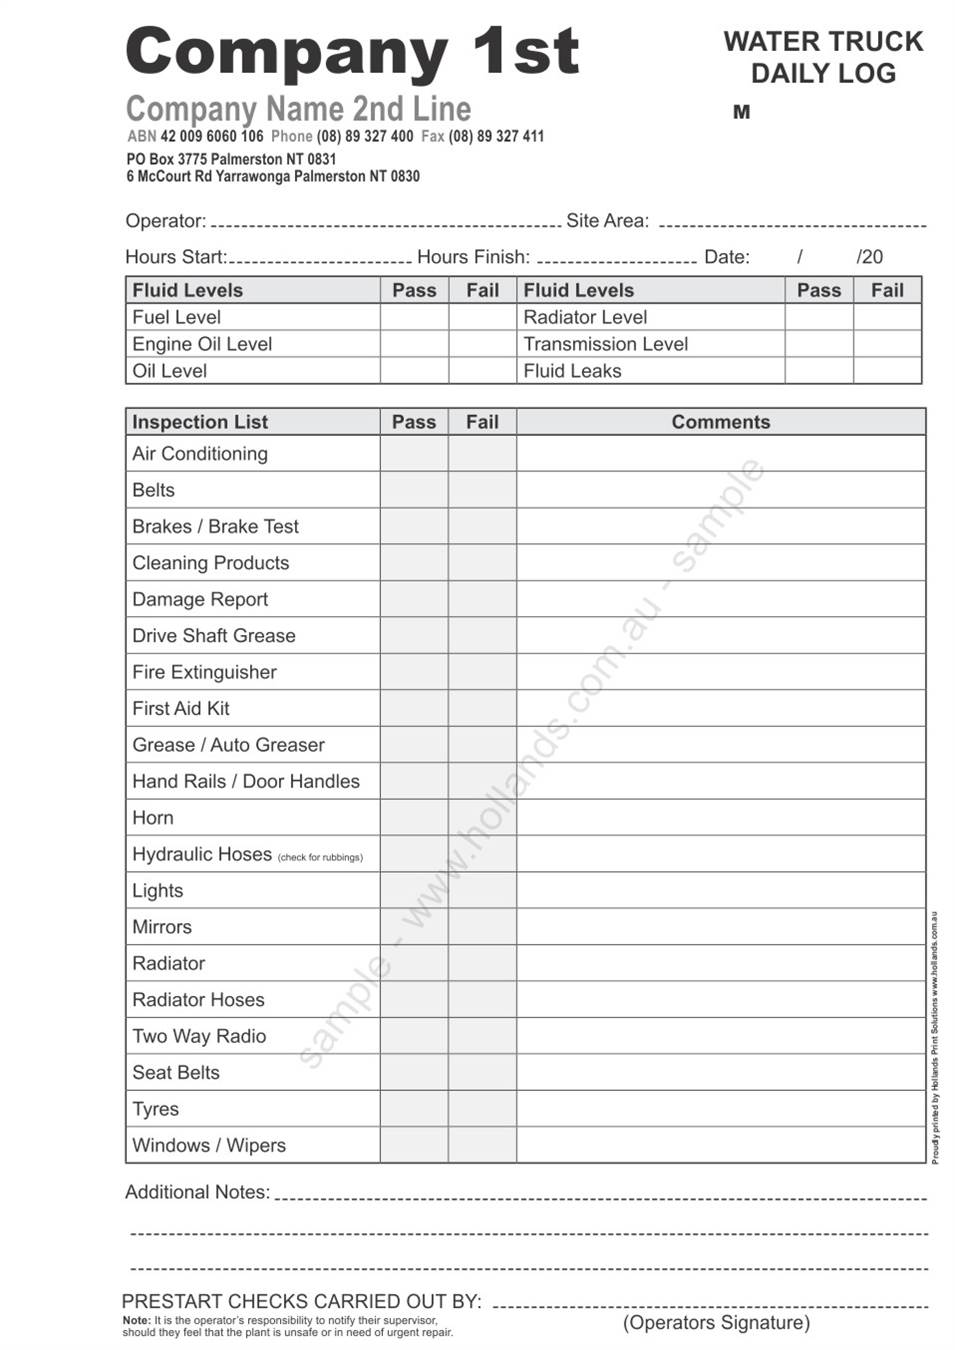 water truck pre start checklist: Water Truck Daily Log